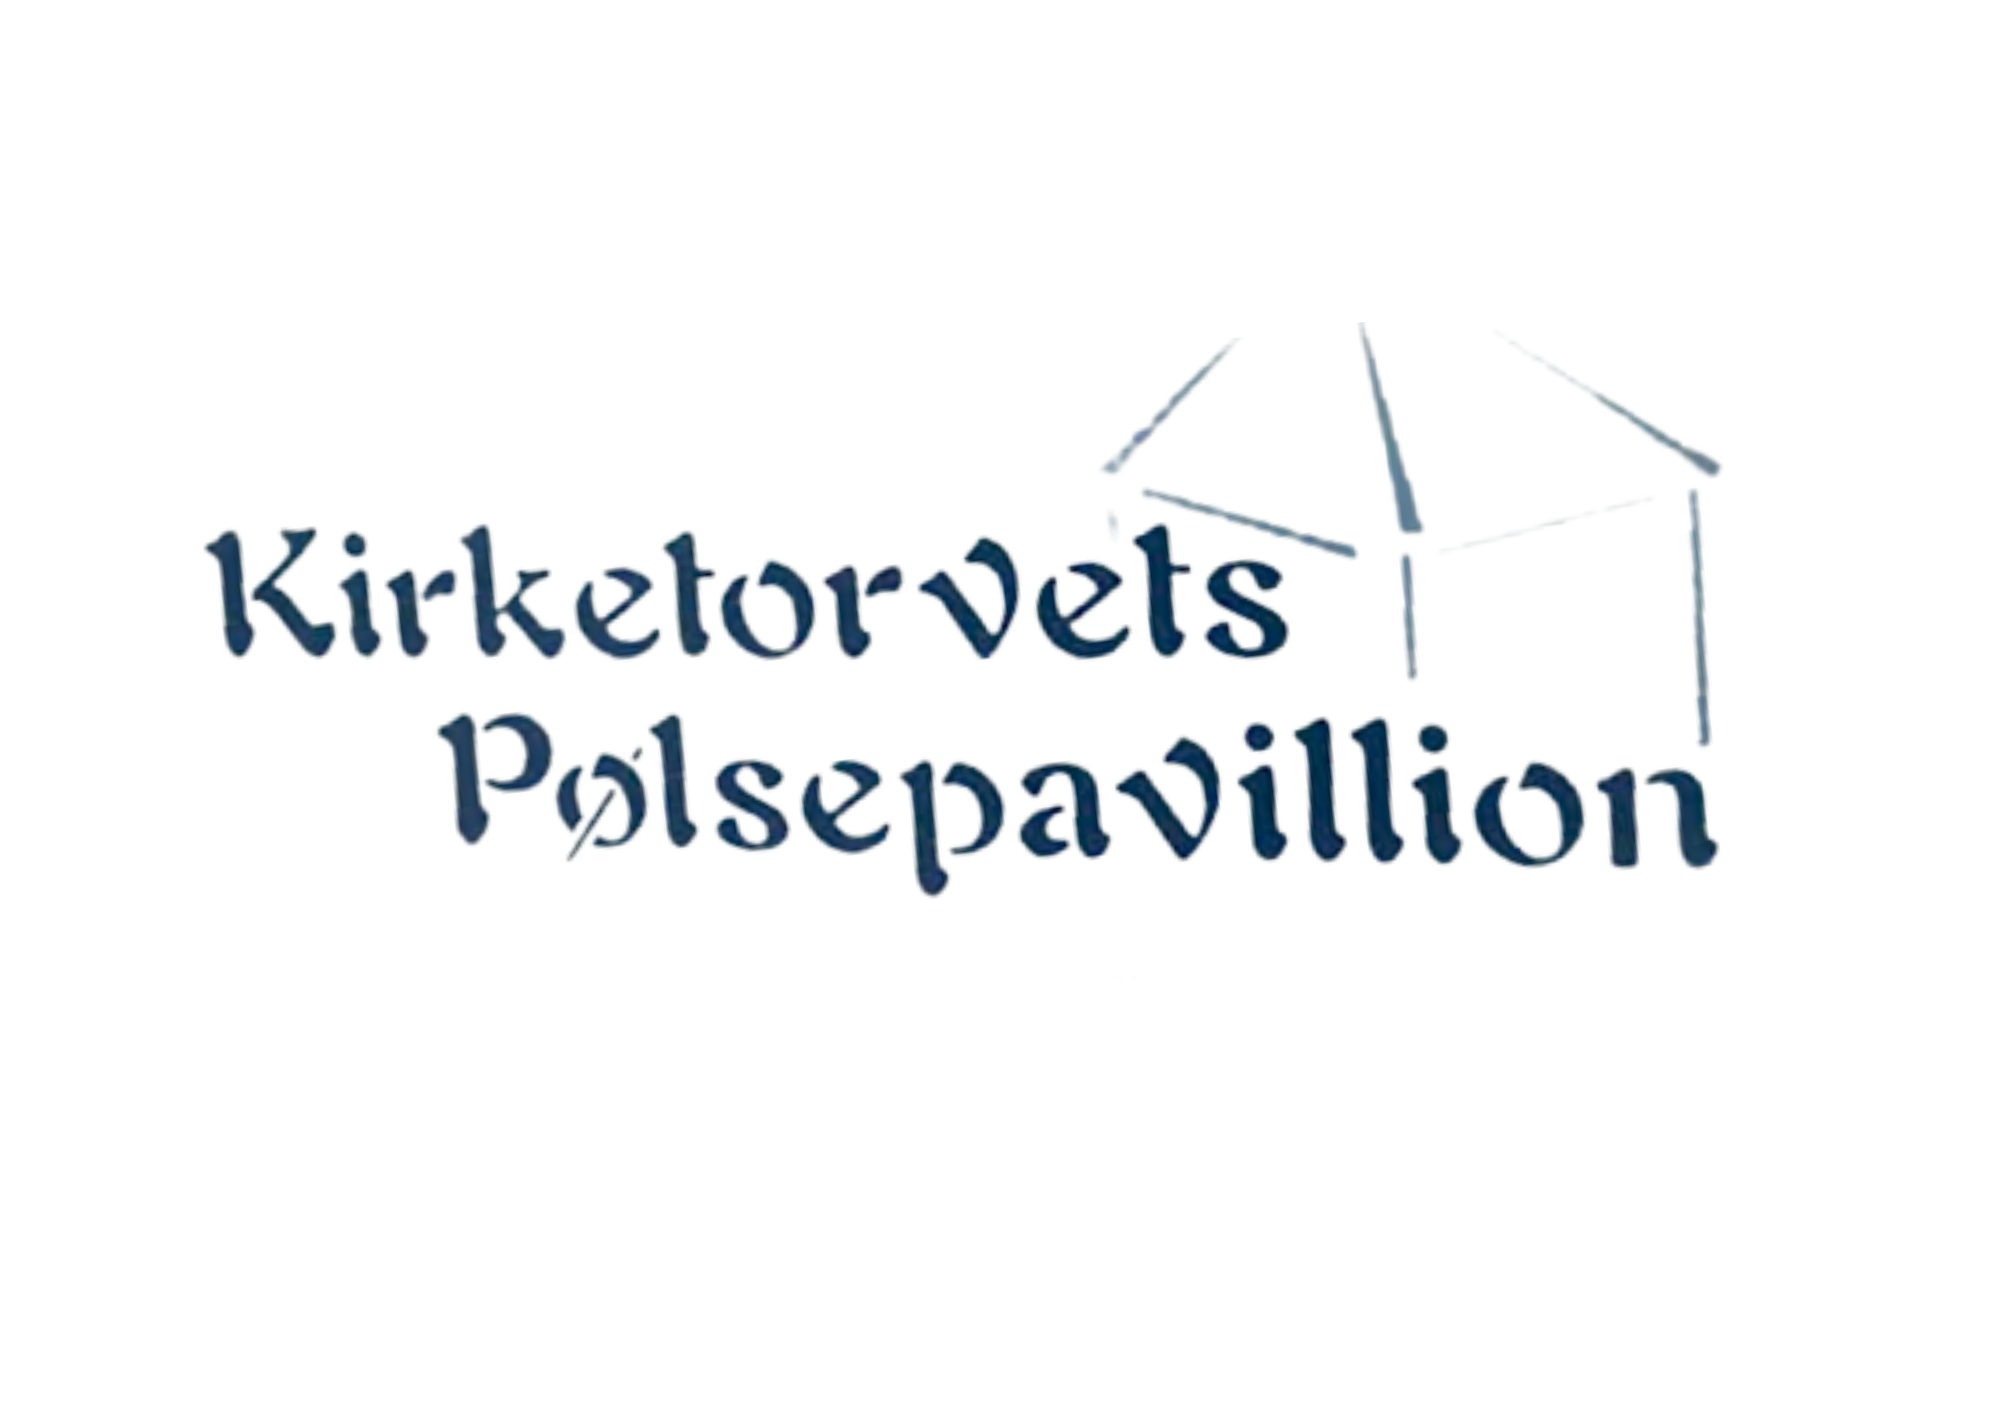 KIRKETORVETS PØLSEPAVILLON